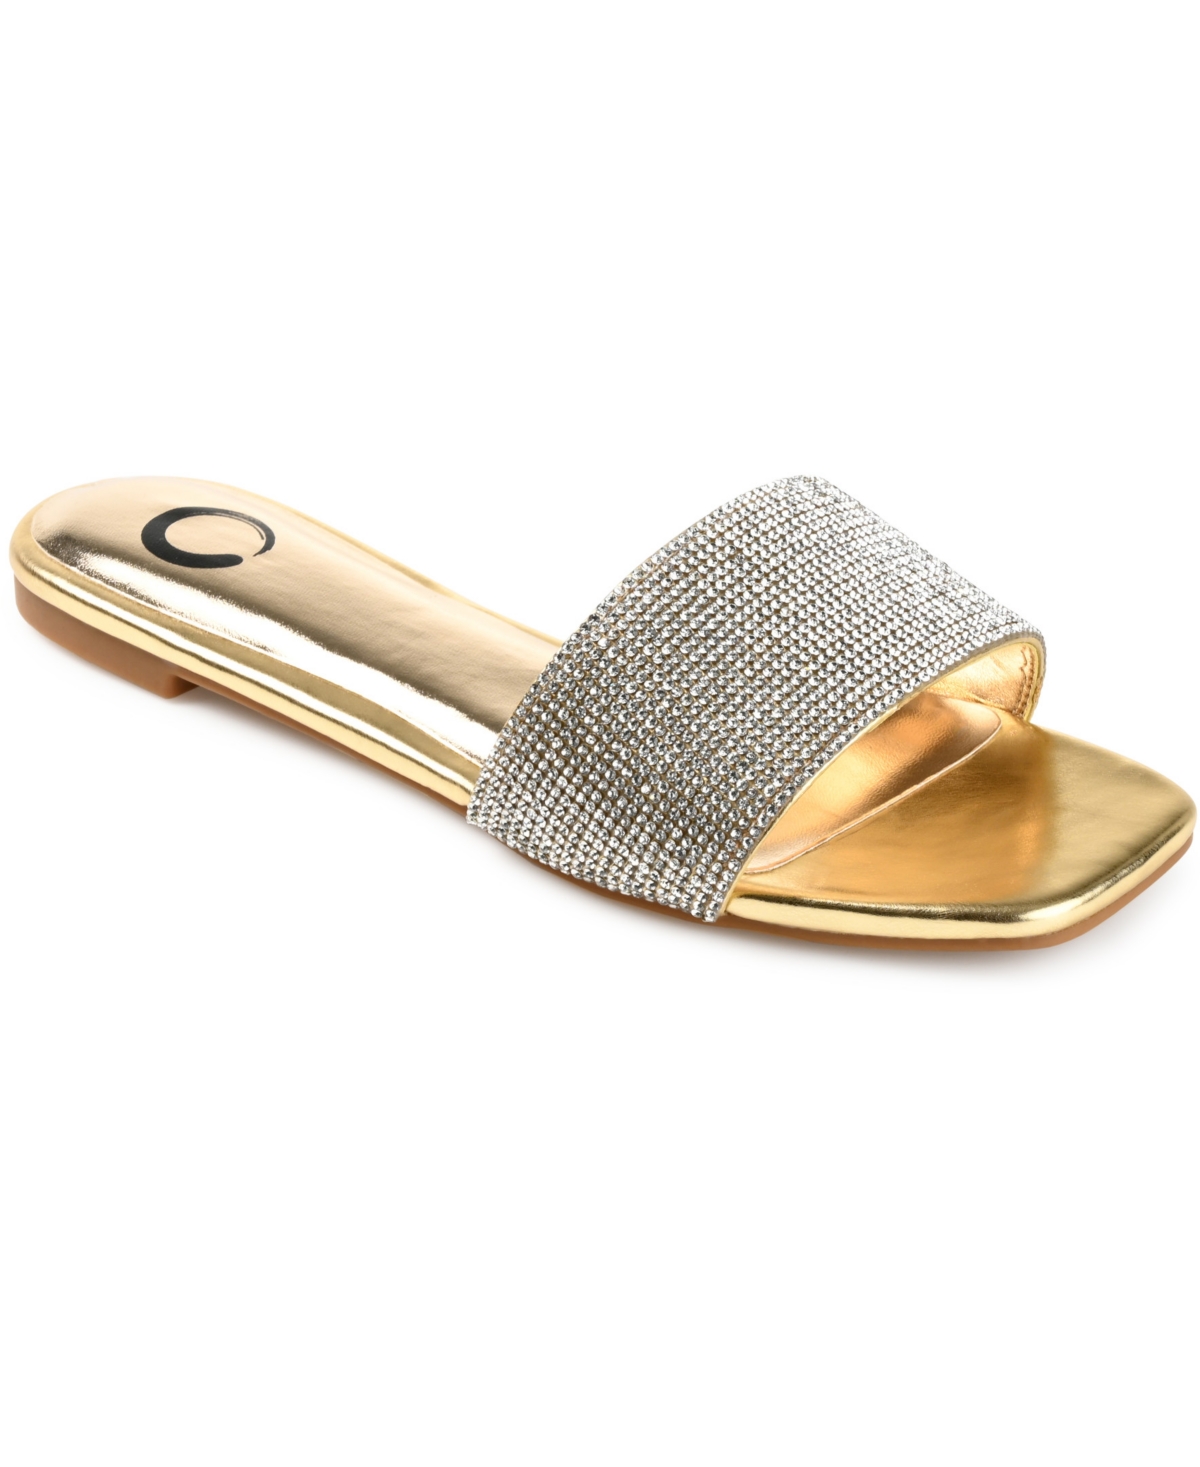 Women's Grayce Rhinestone Flat Sandals - Silver